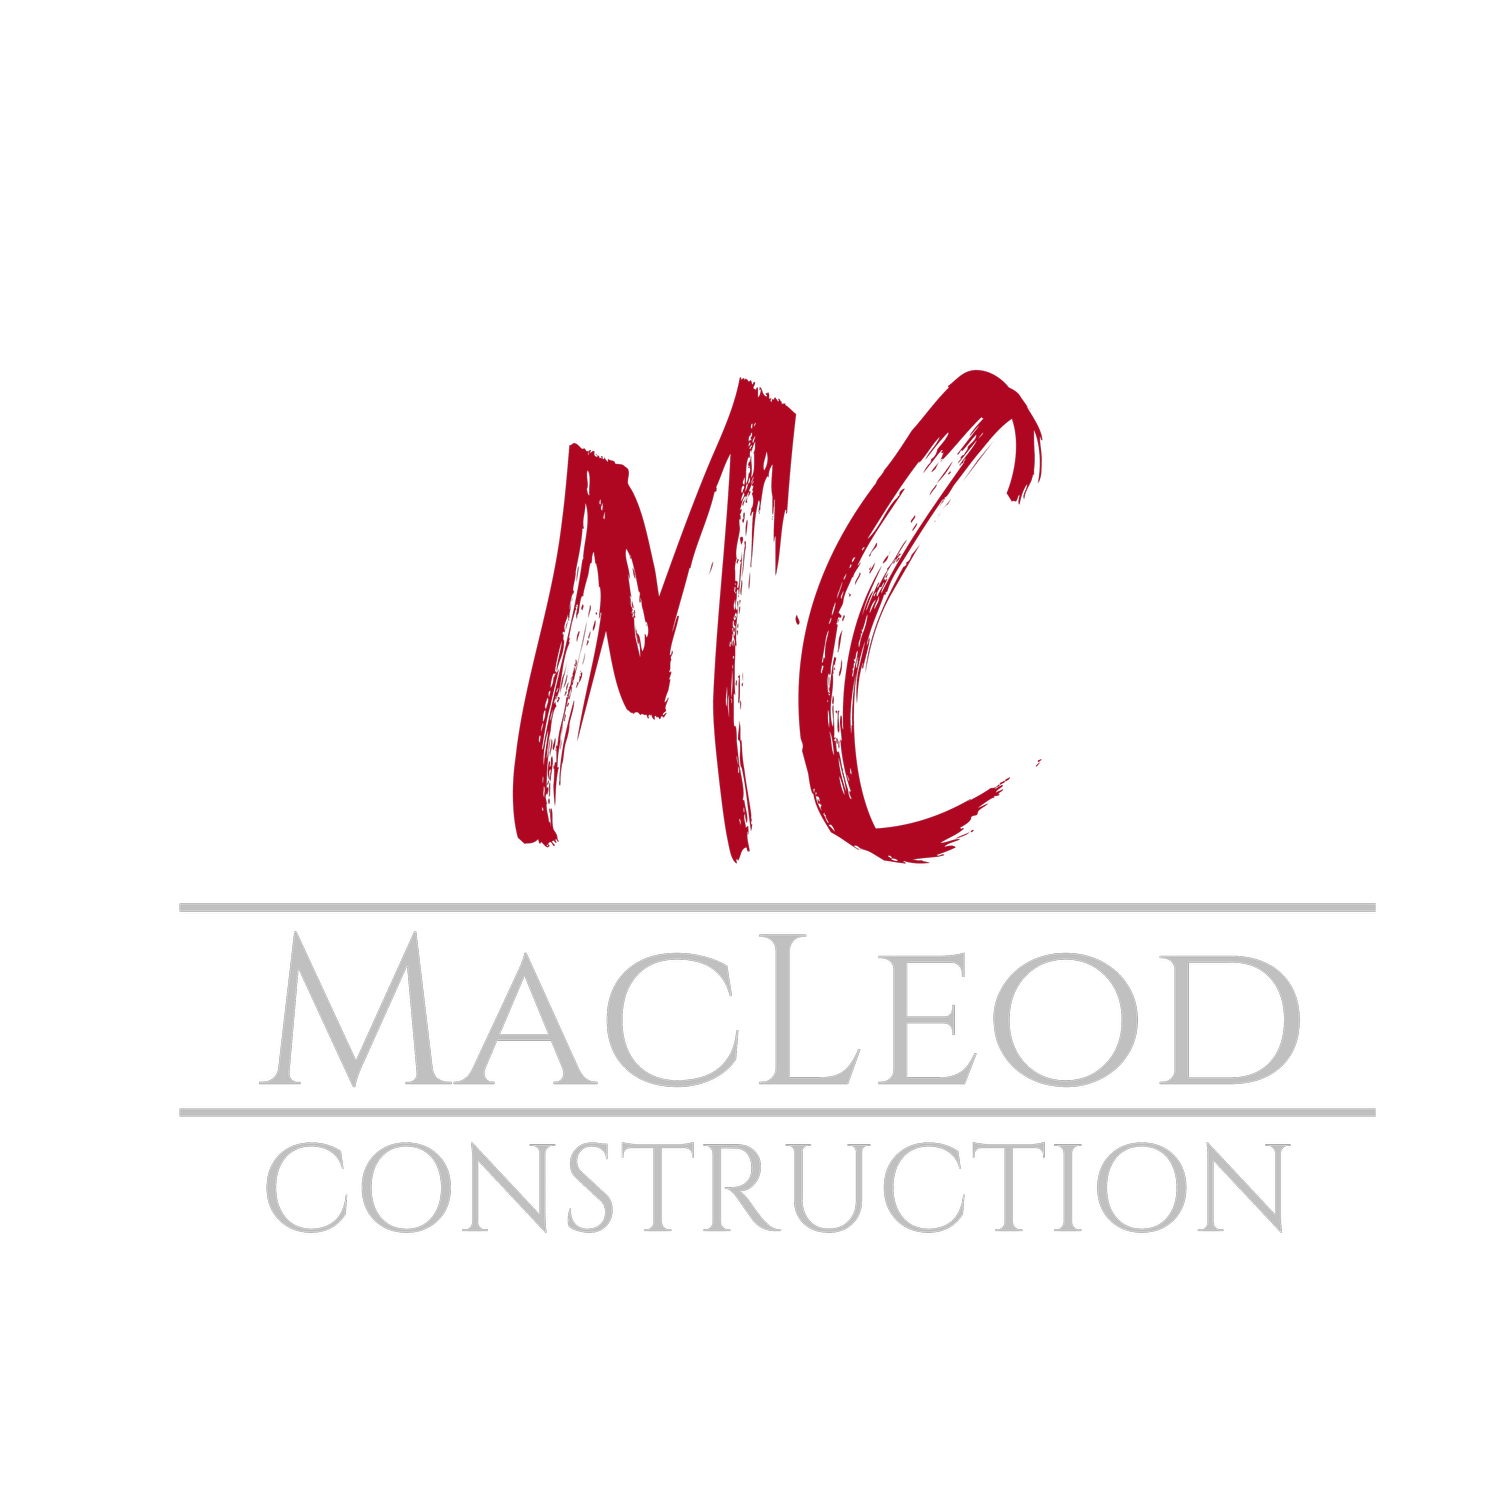 MacLeod Construction